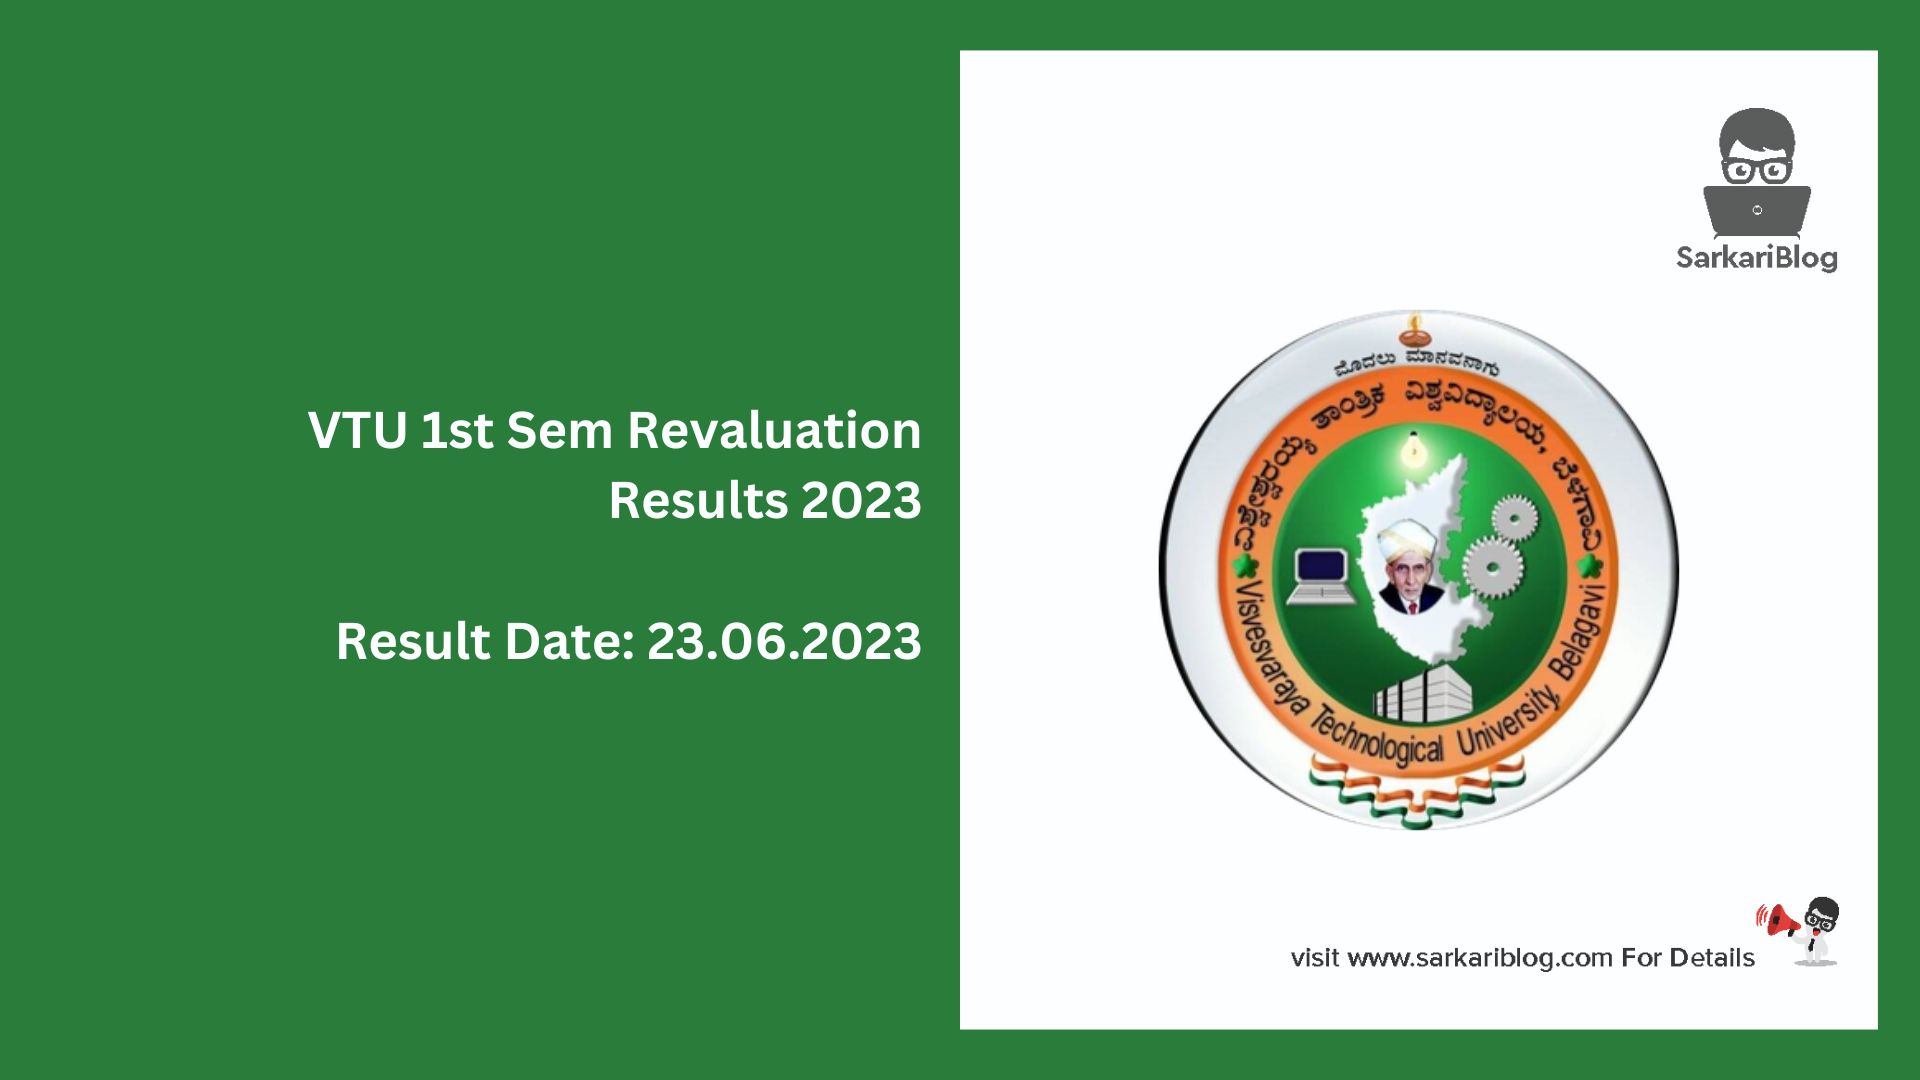 VTU 1st Sem Revaluation Results 2023